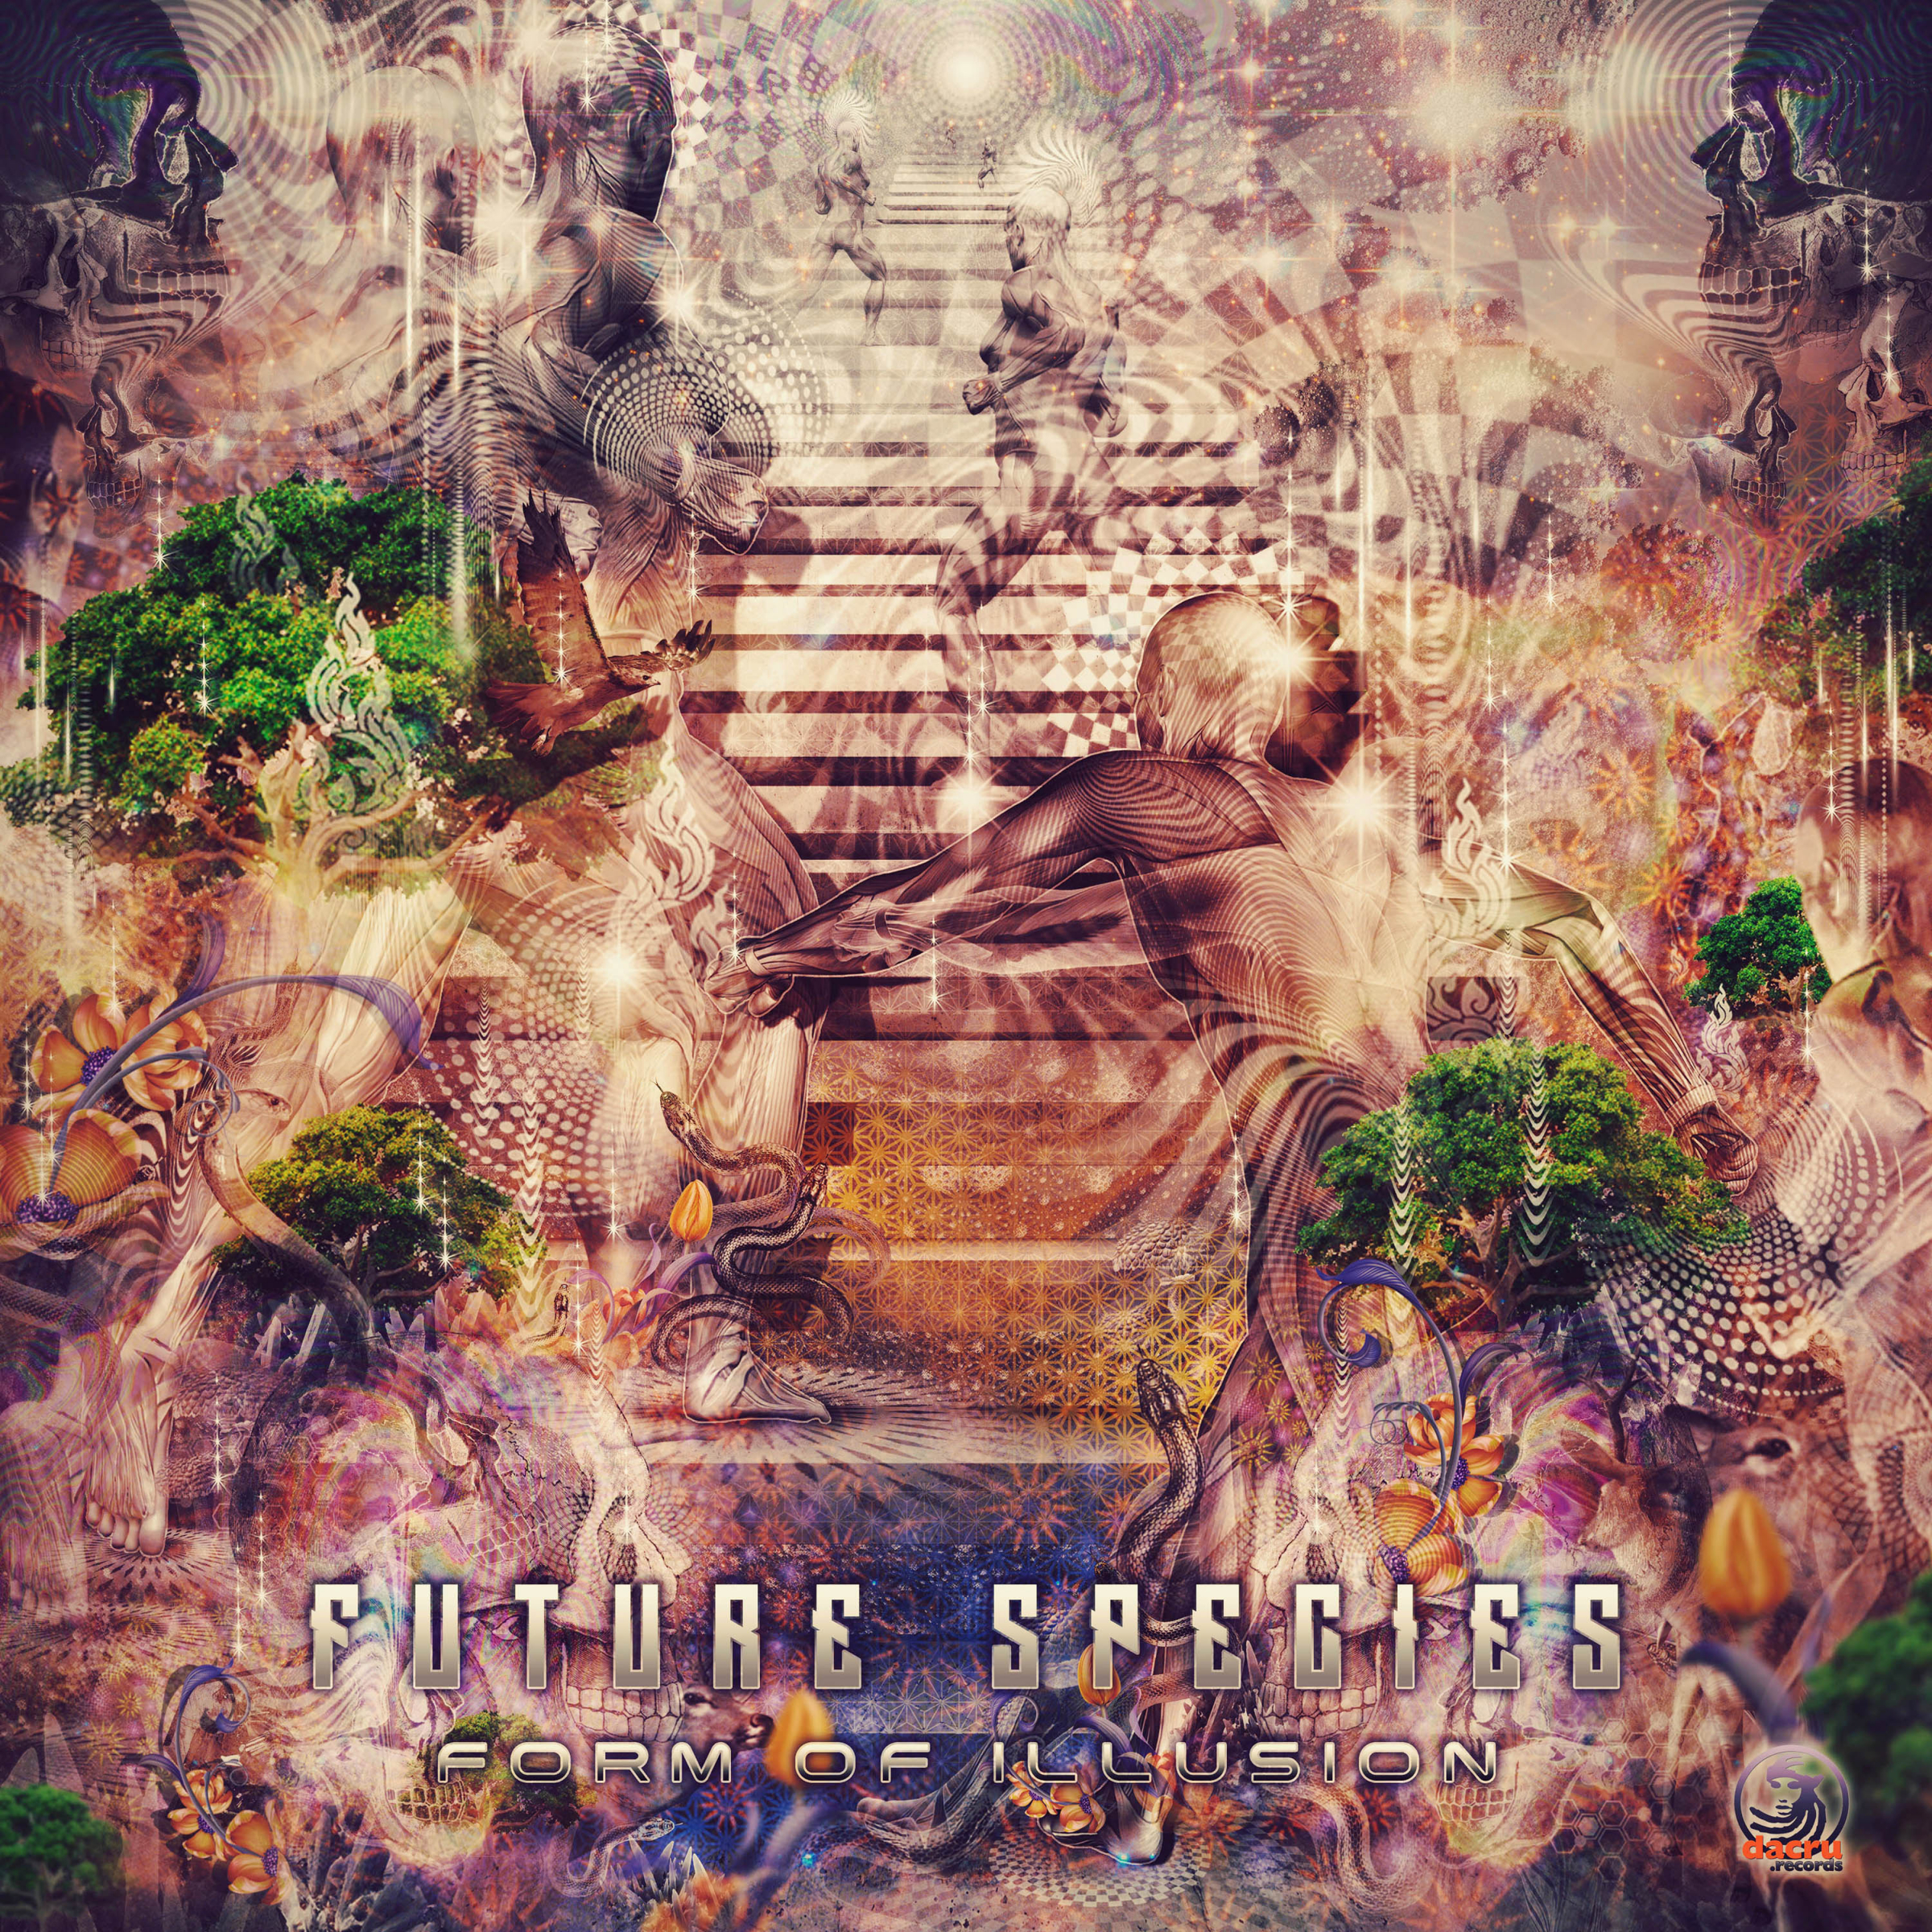 Delusion about Future. Future field. Burn in Noise Dacru records. Serpents Recrent albom format.